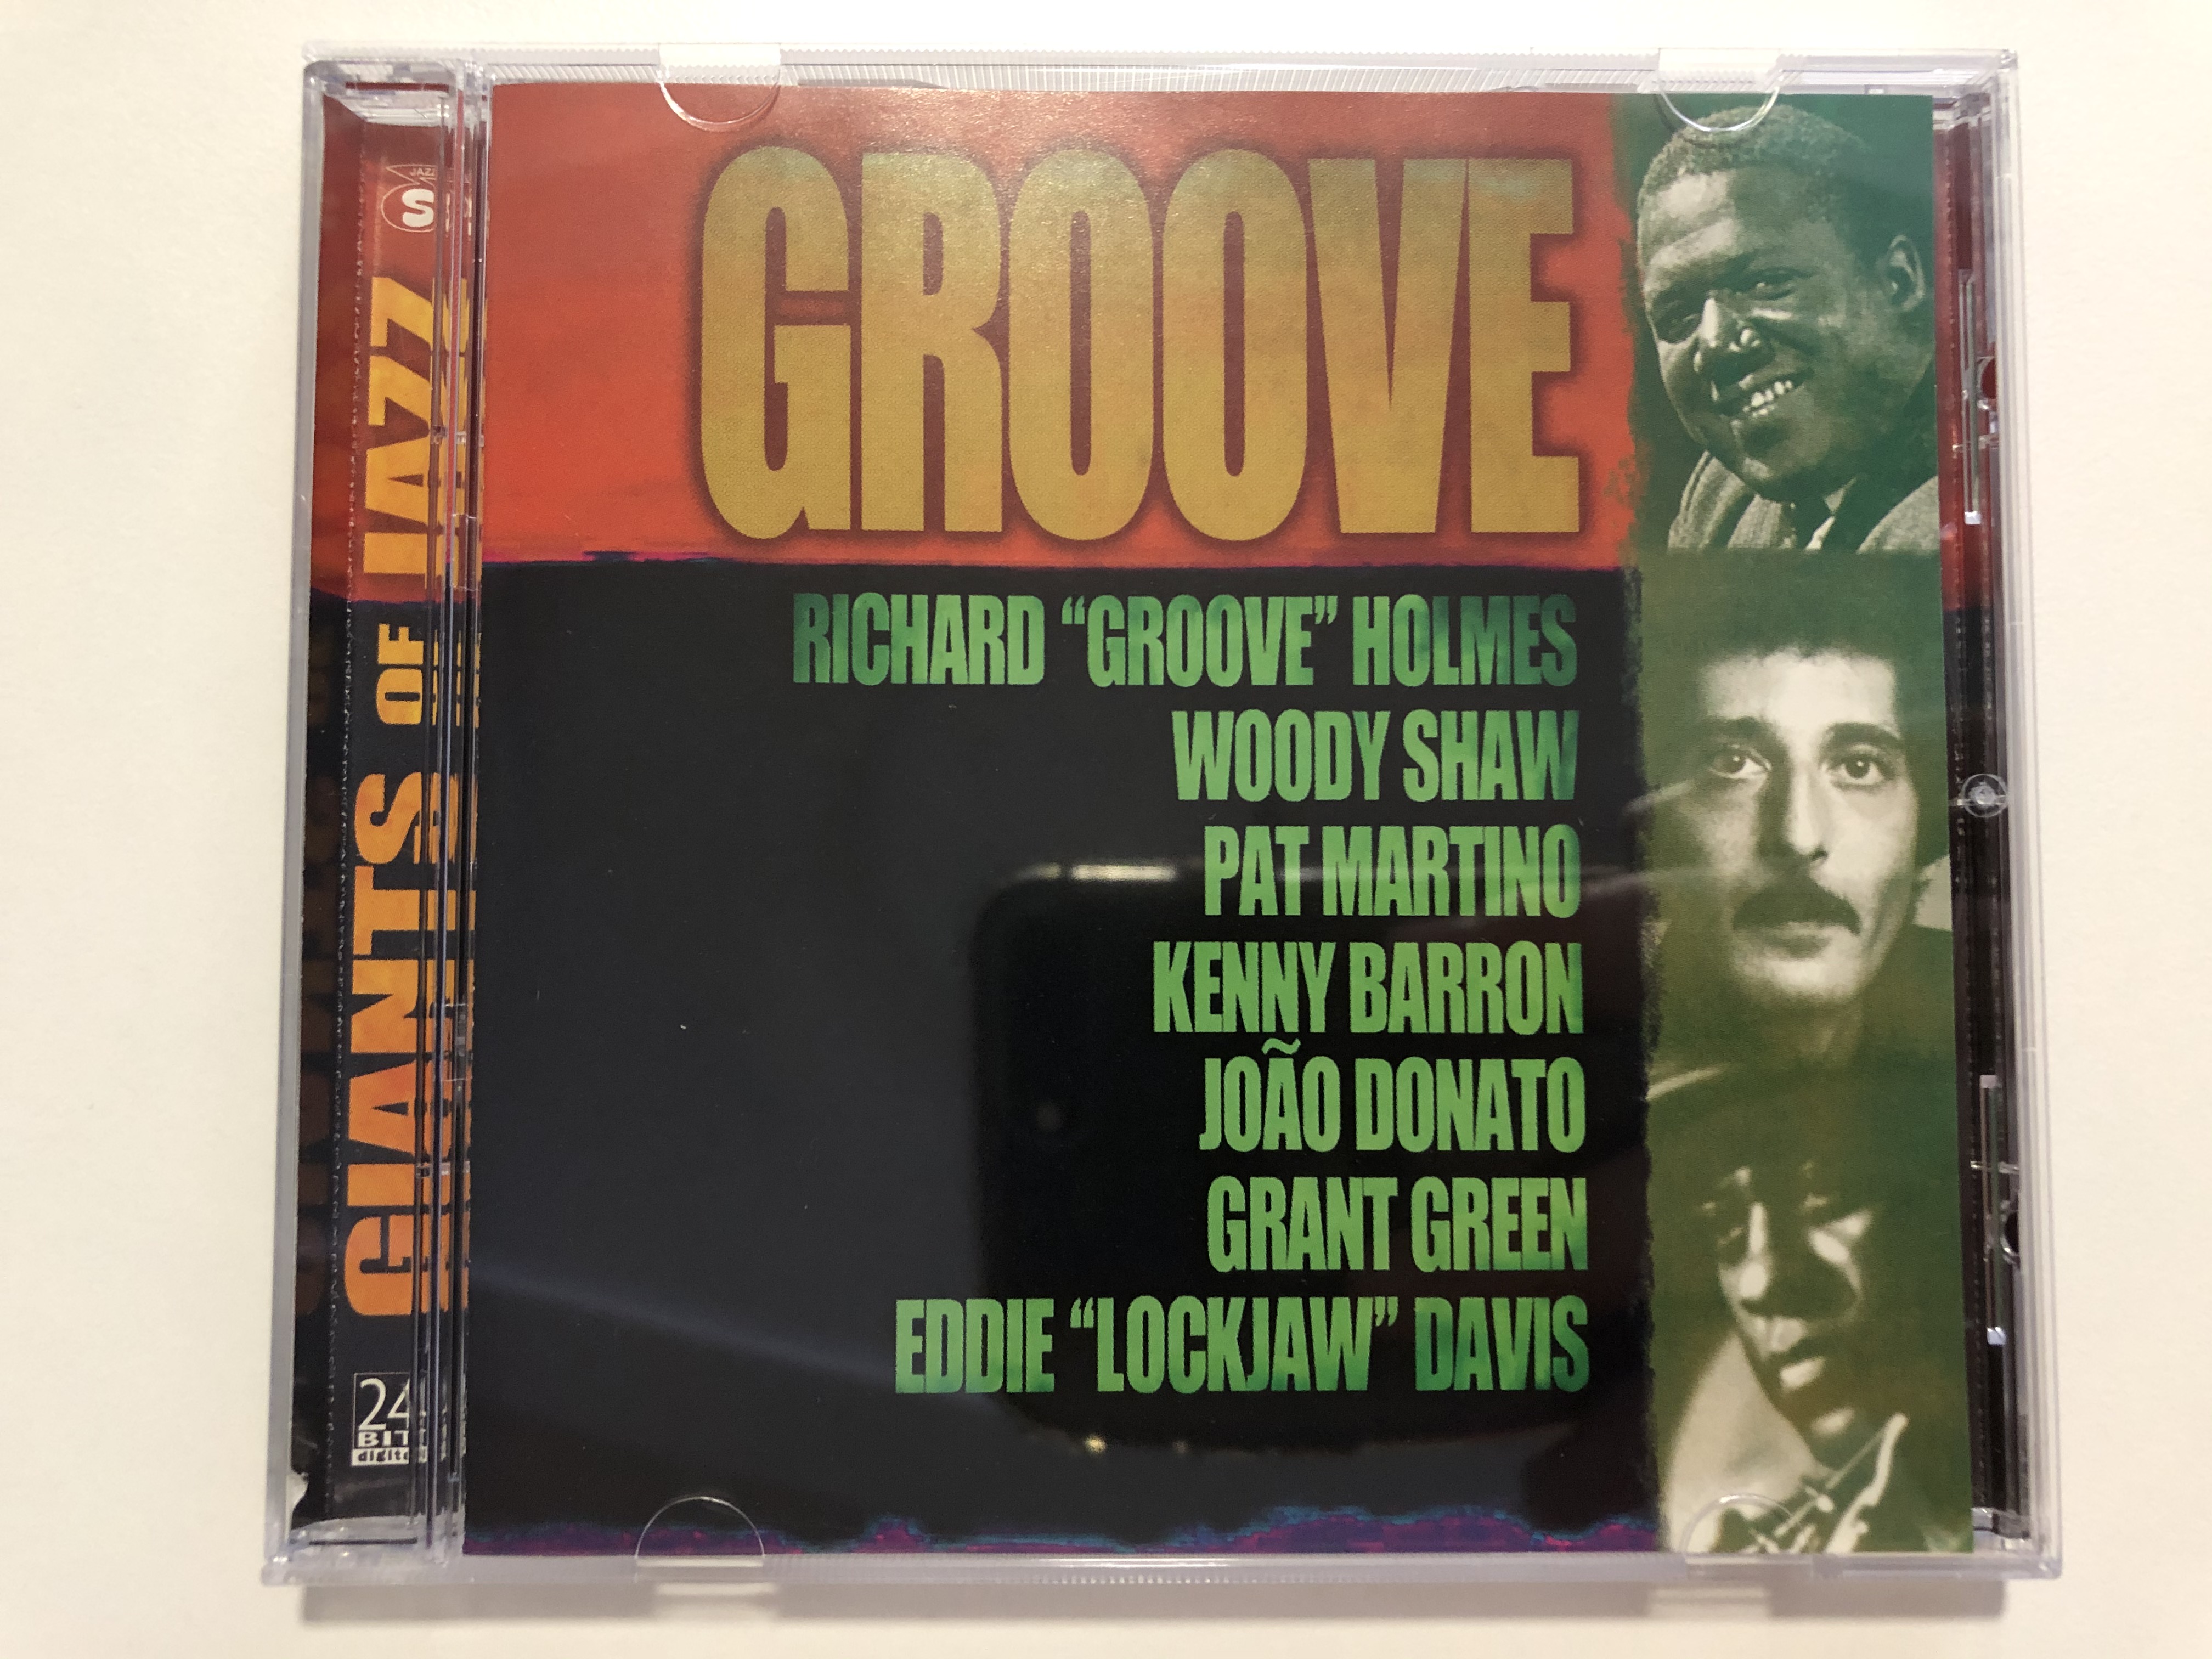 giants-of-jazz-groove-richard-groove-holmes-woody-shaw-pat-martino-kenny-barron-joao-donato-grant-green-eddie-lockjaw-davis-savoy-jazz-audio-cd-2004-svy17321-1-.jpg